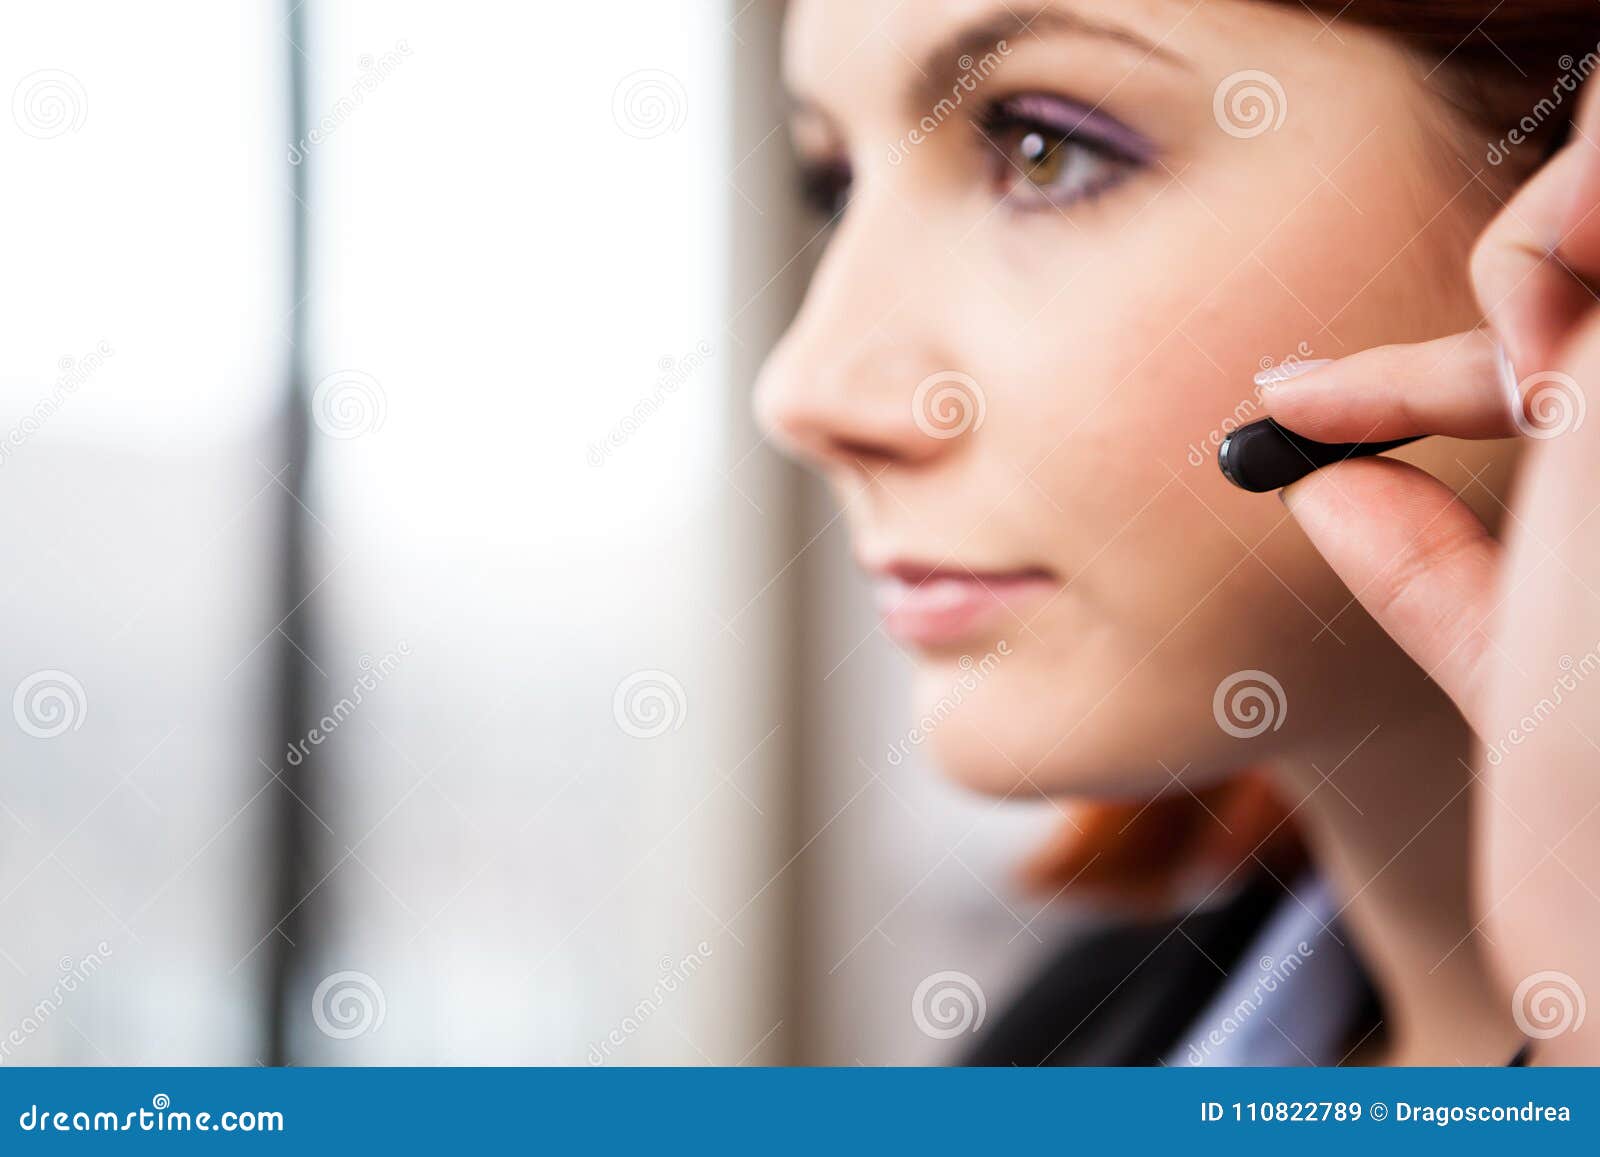 Close Up Of Help Desk Worker Stock Image Image Of Girl Online